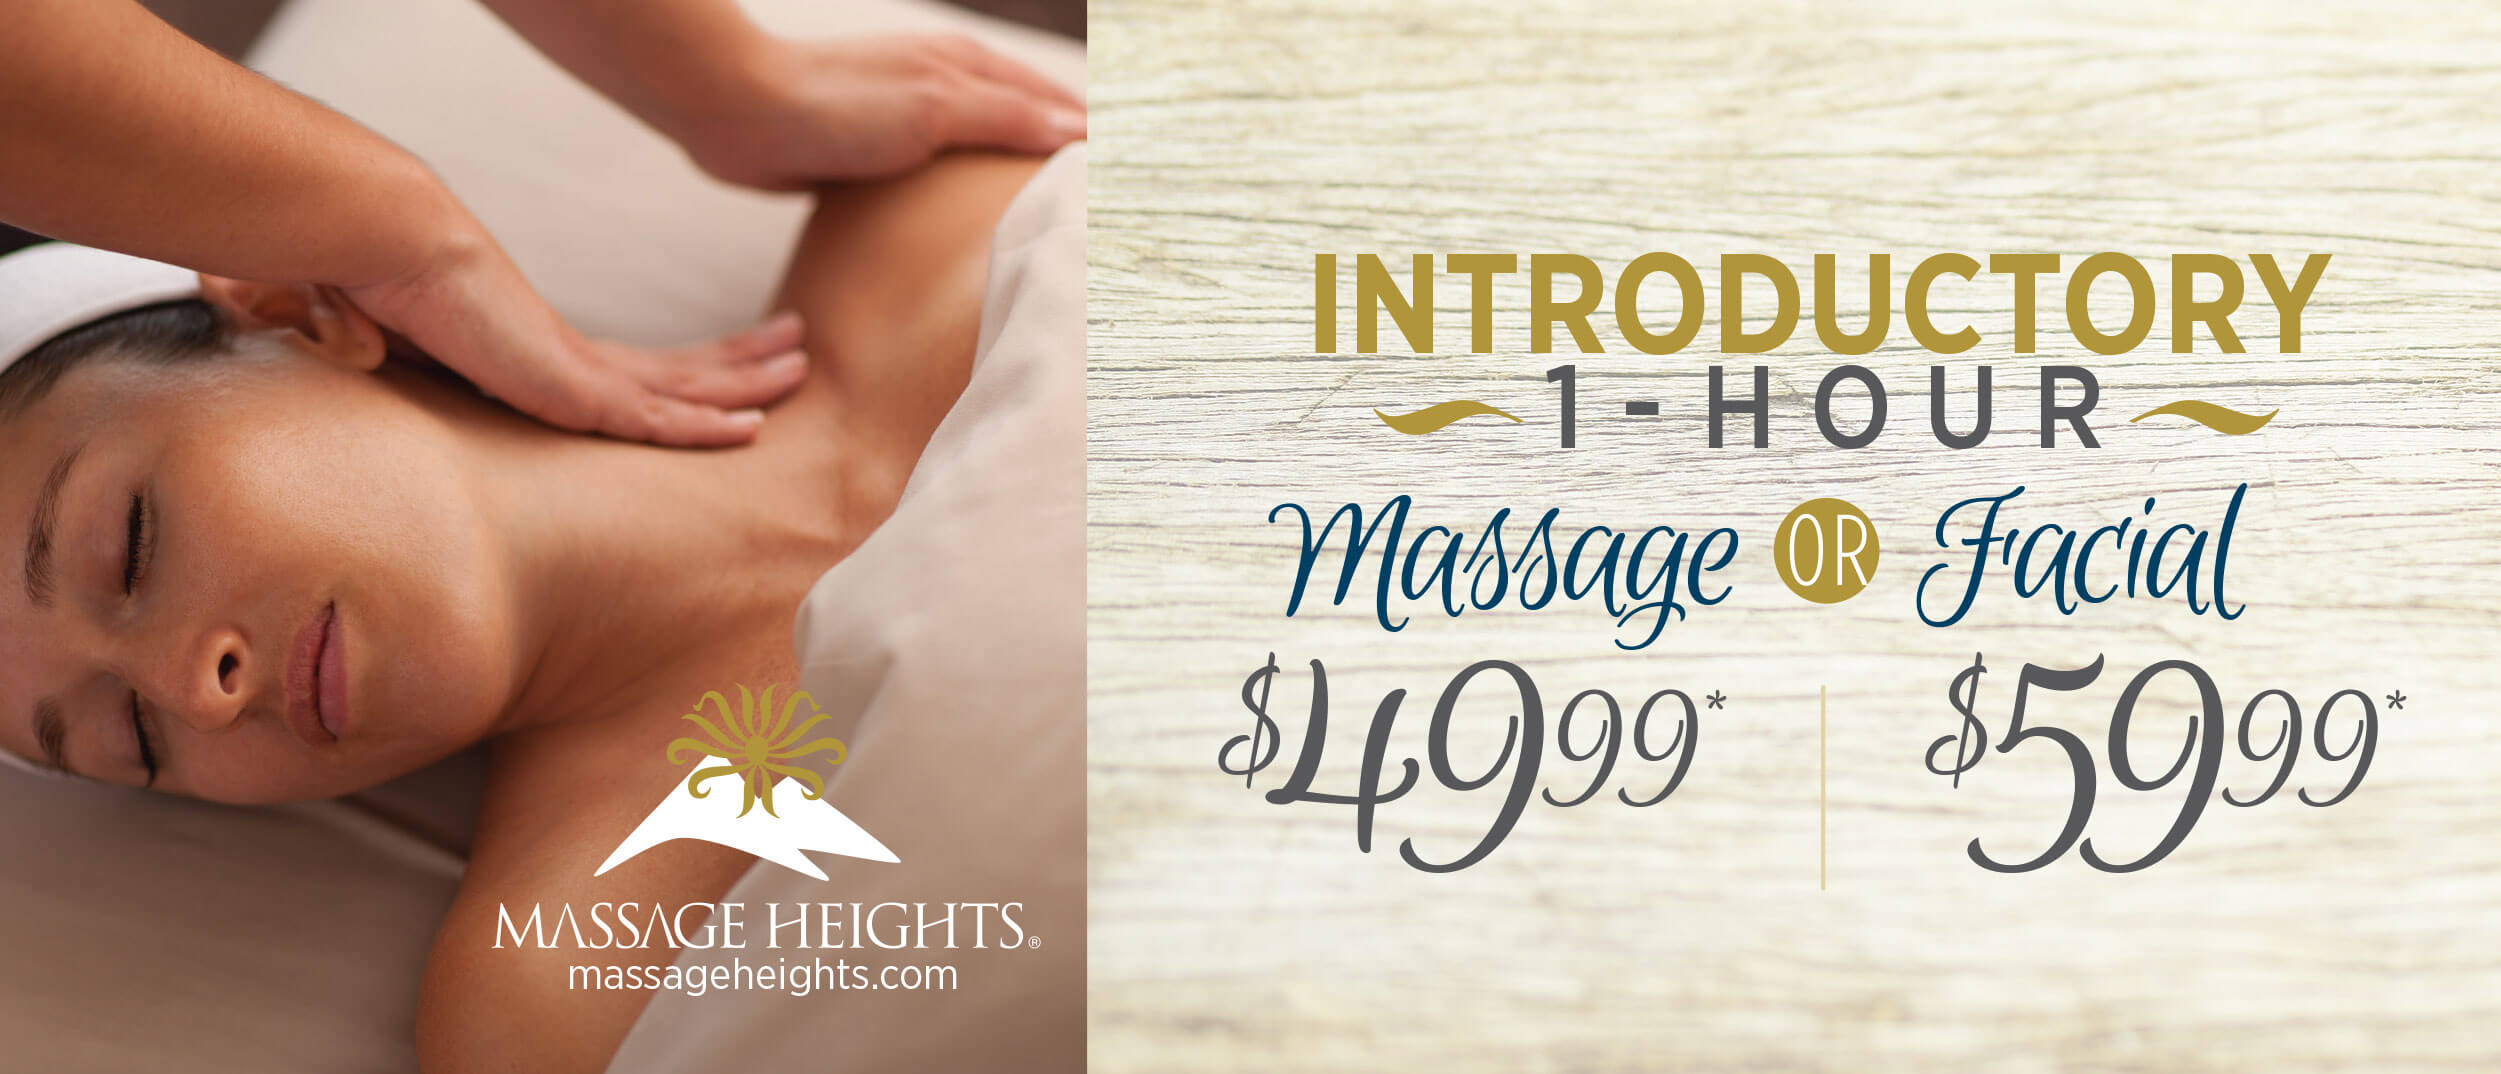 Massage Heights Intro Massage Flyer